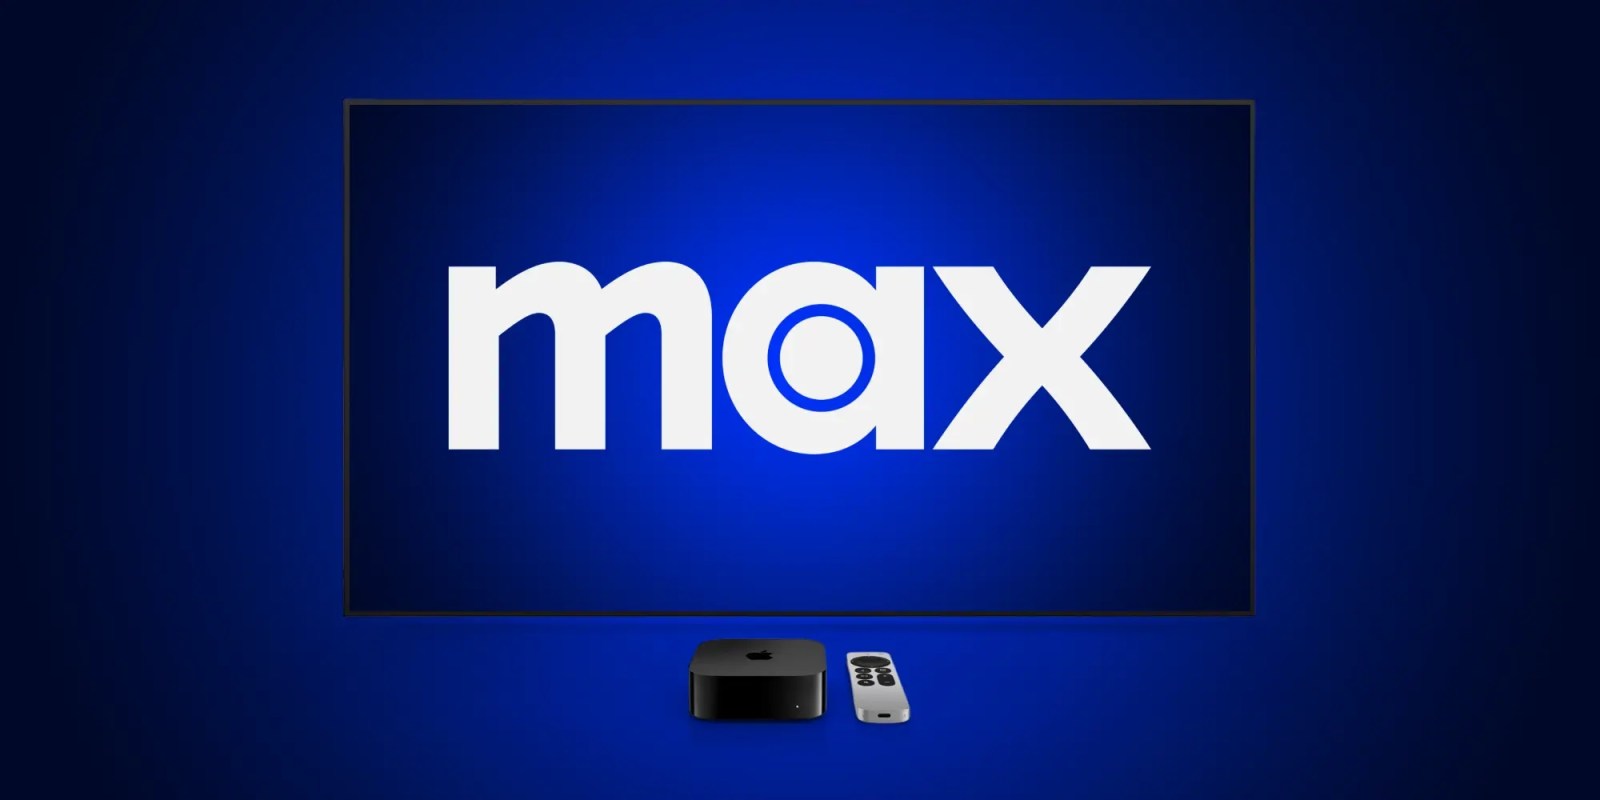 Max streaming app